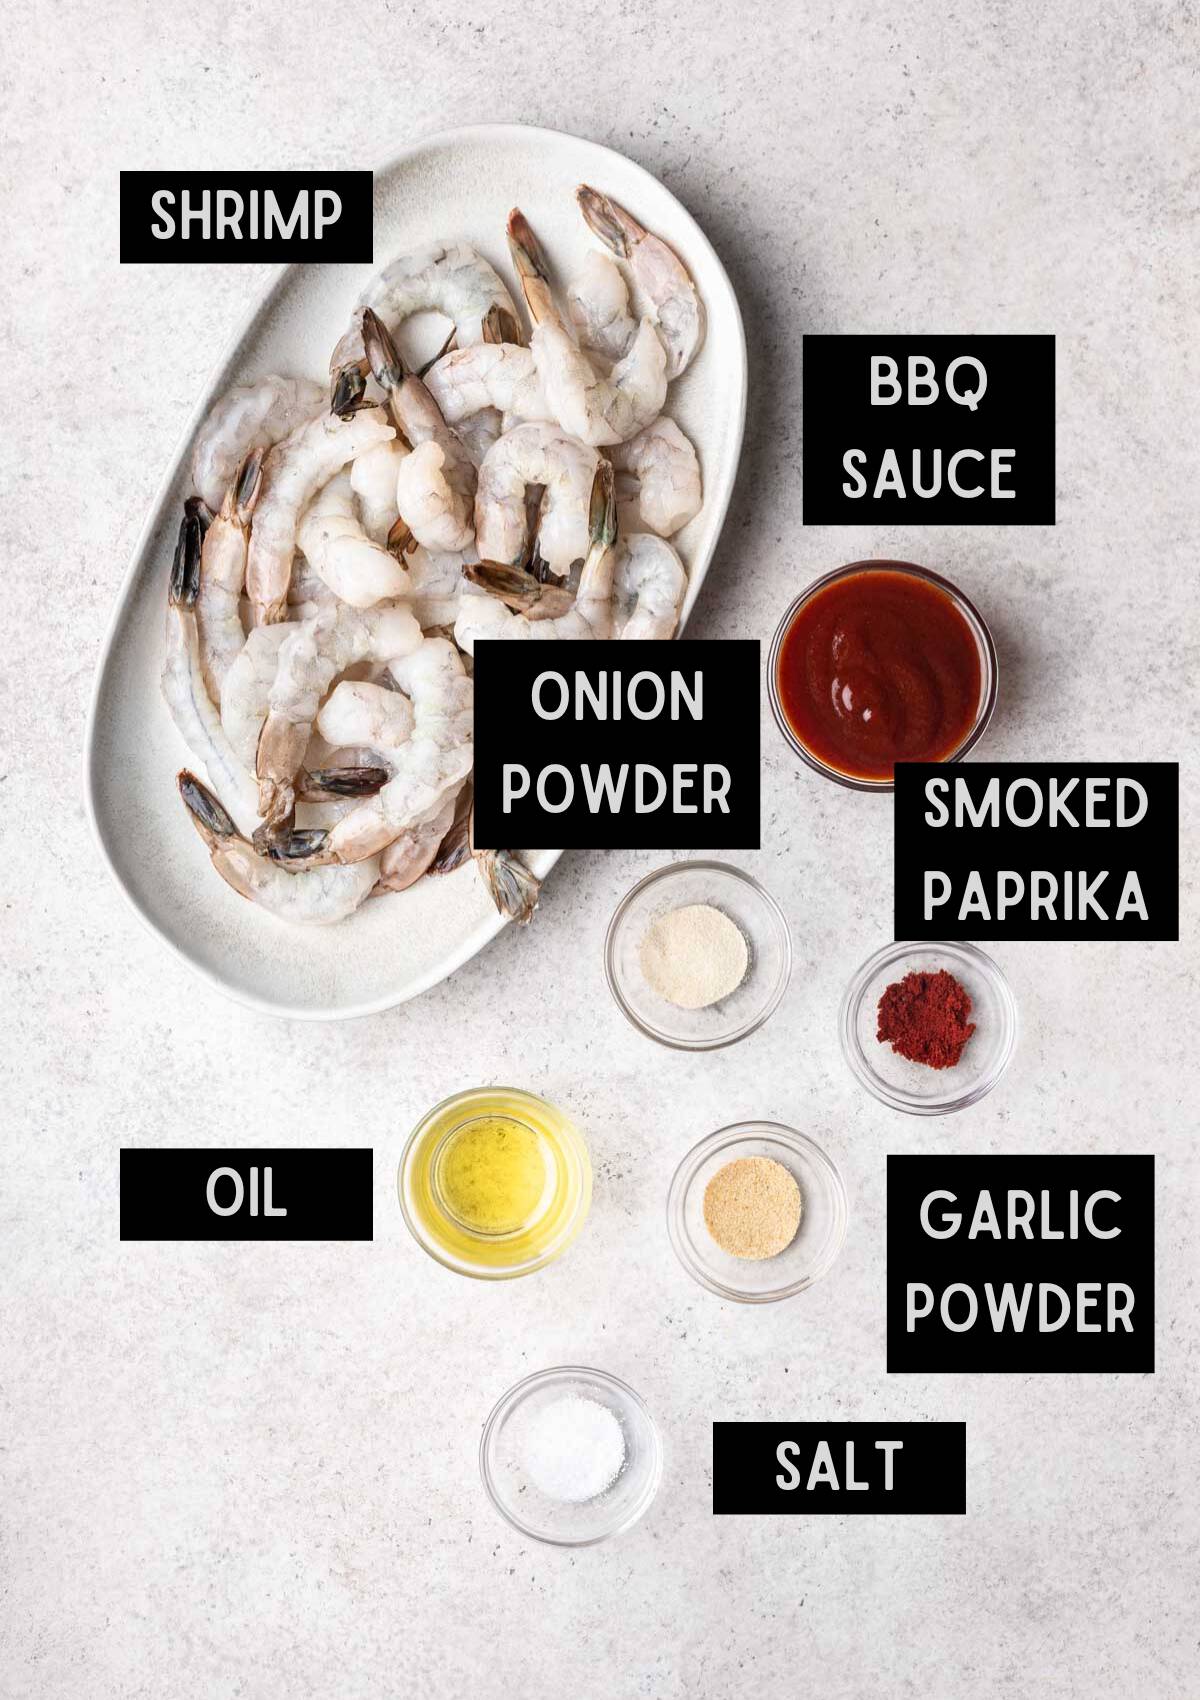 Labelled ingredients for grilled shrimp (see recipe for details).